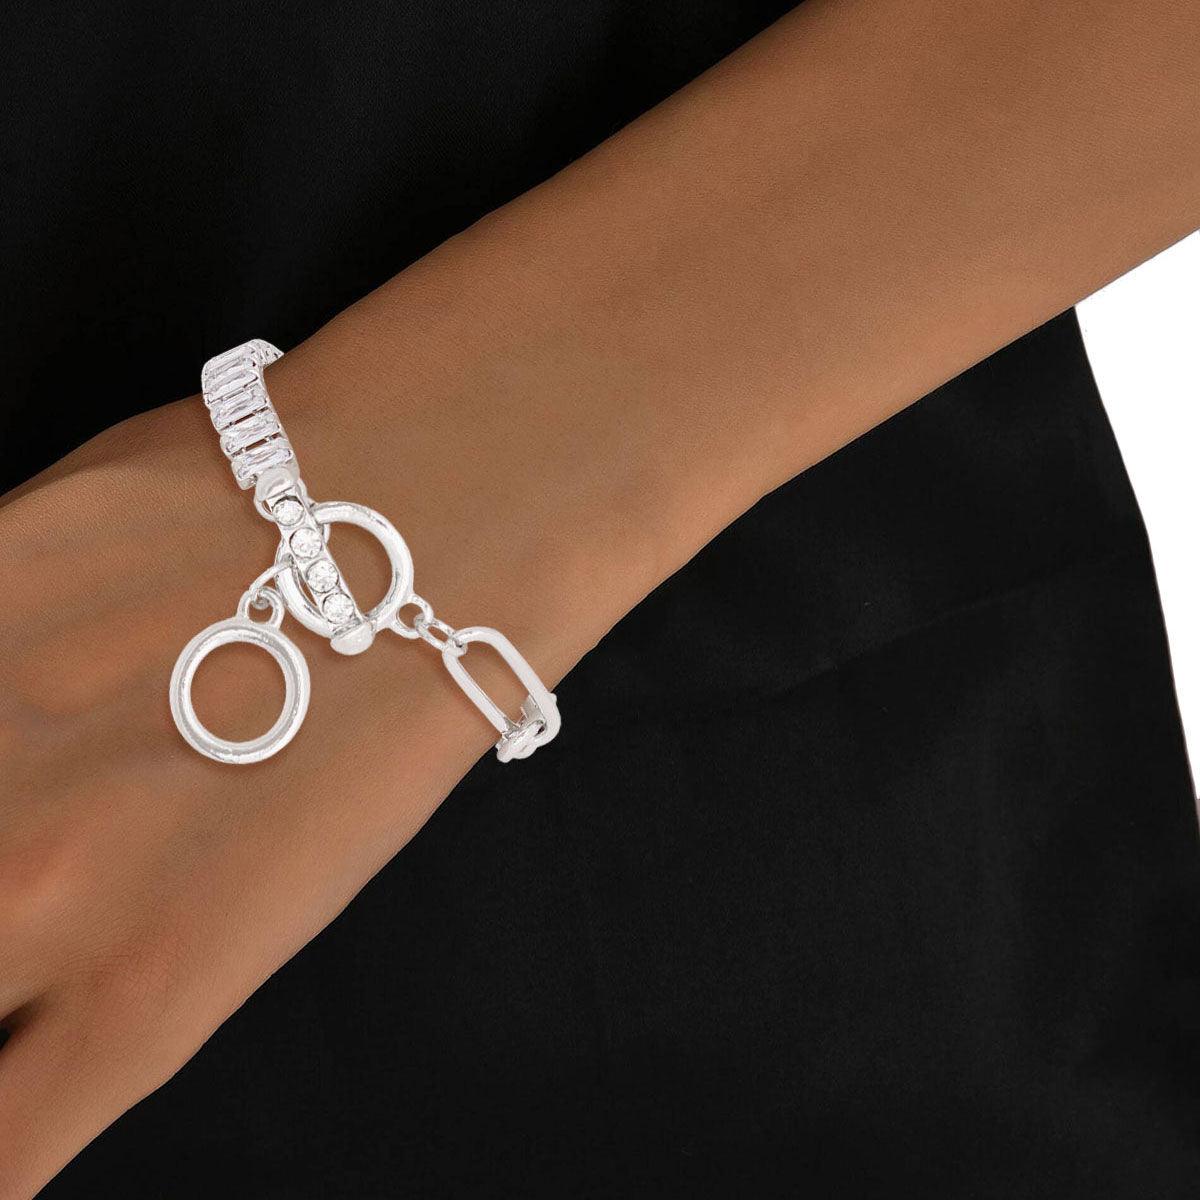 Silver-tone Women's Cubic Zirconia Link Bracelet: Sparkle & Shine